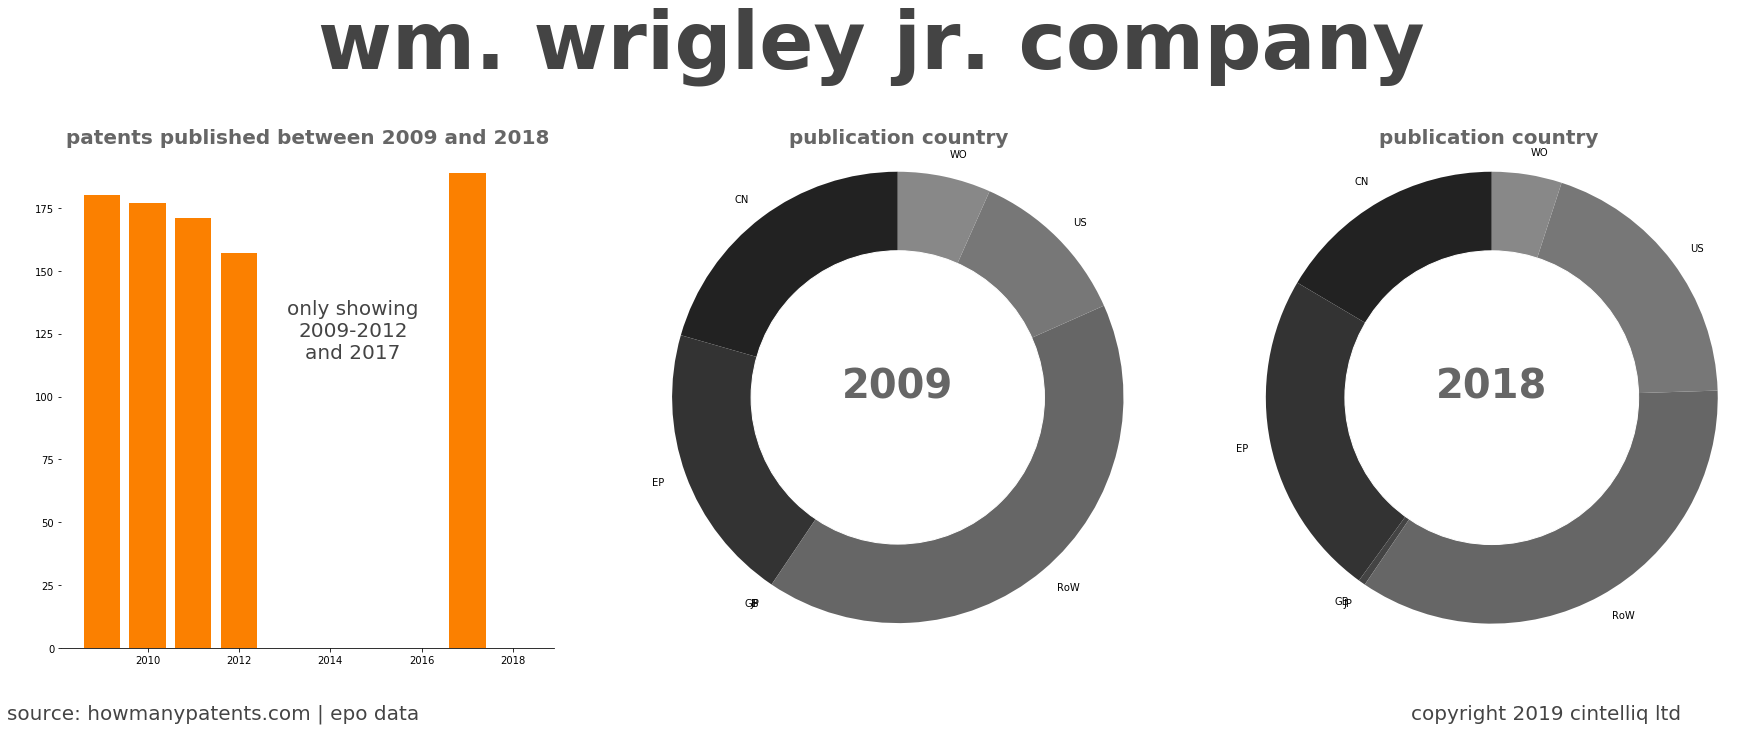 summary of patents for Wm. Wrigley Jr. Company